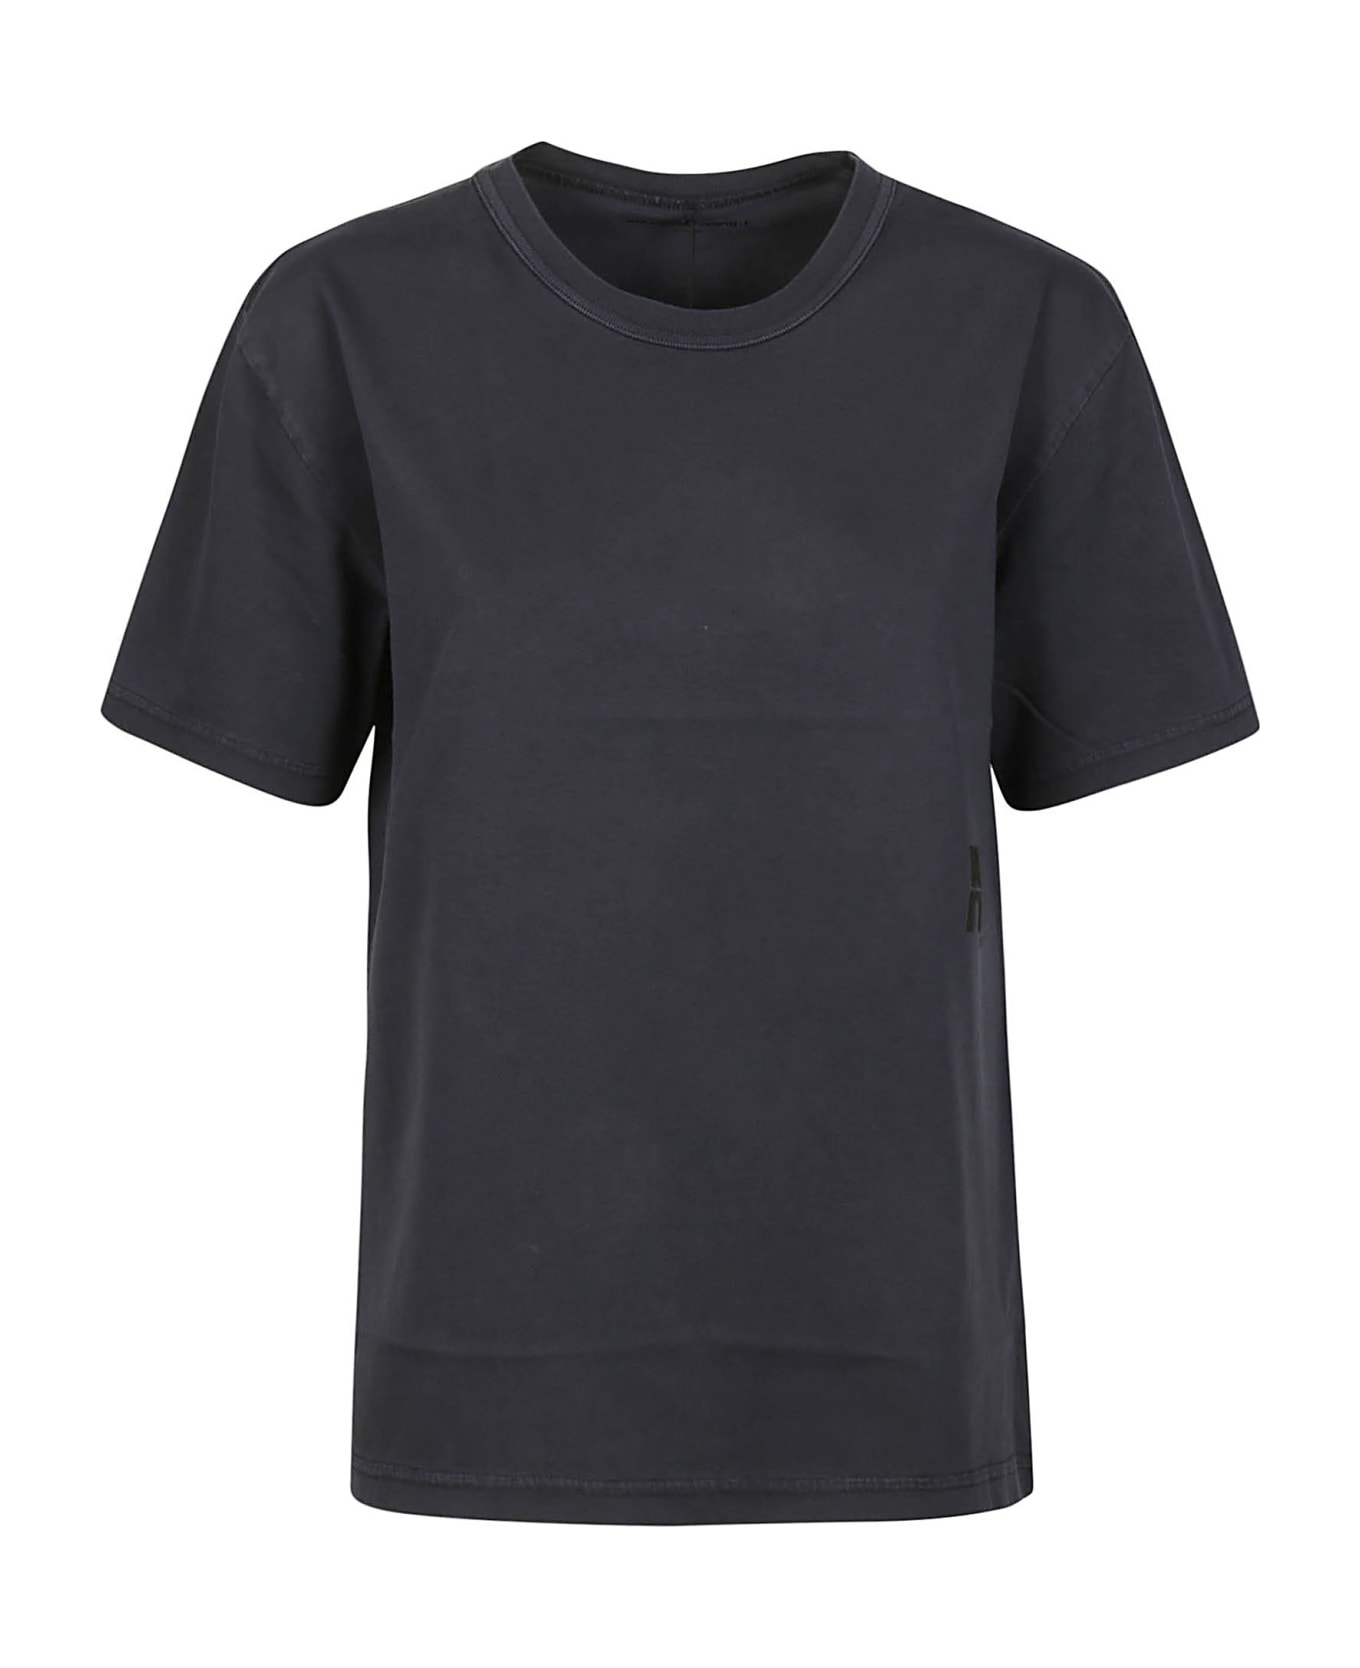 T by Alexander Wang Puff Logo Bound Neck Essential T-shirt - A Soft Obsidian